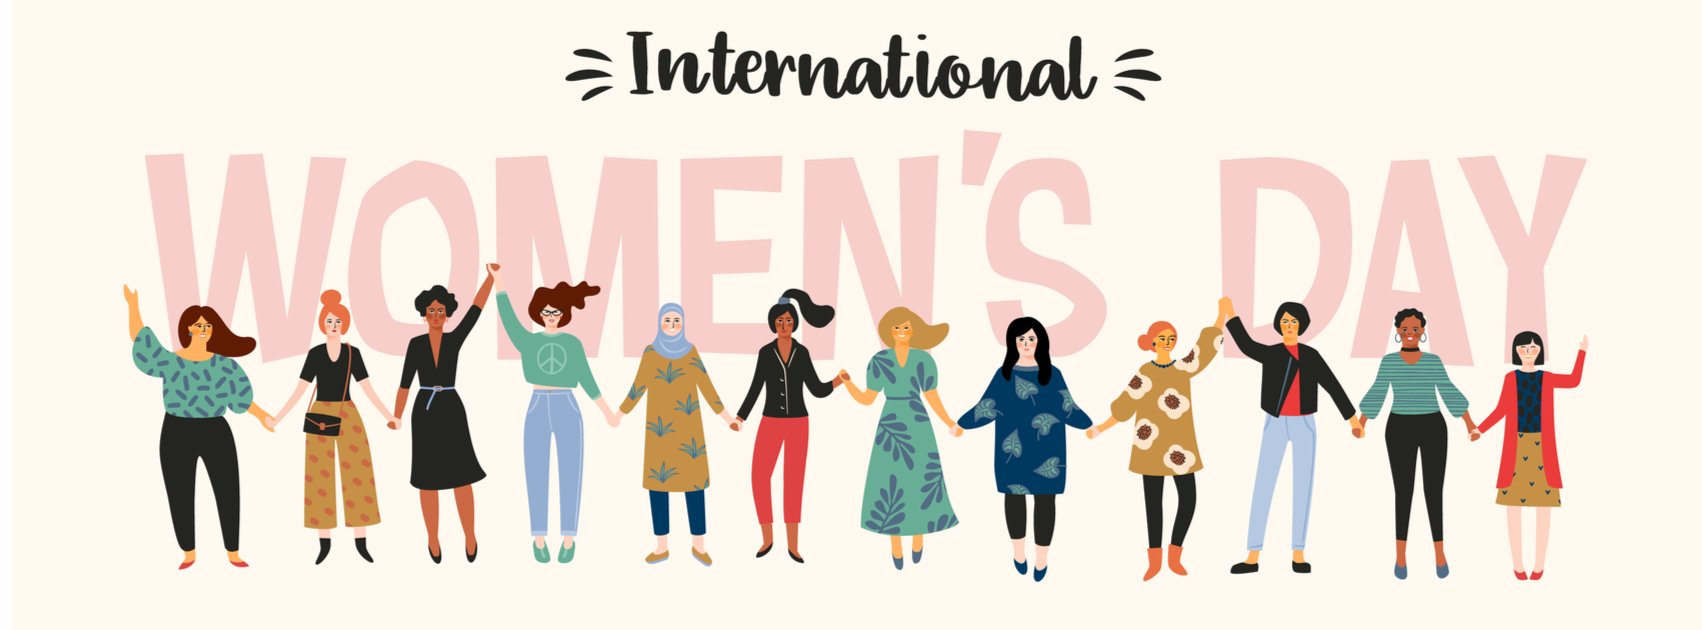 International Women’s Day Celebrations Around the World